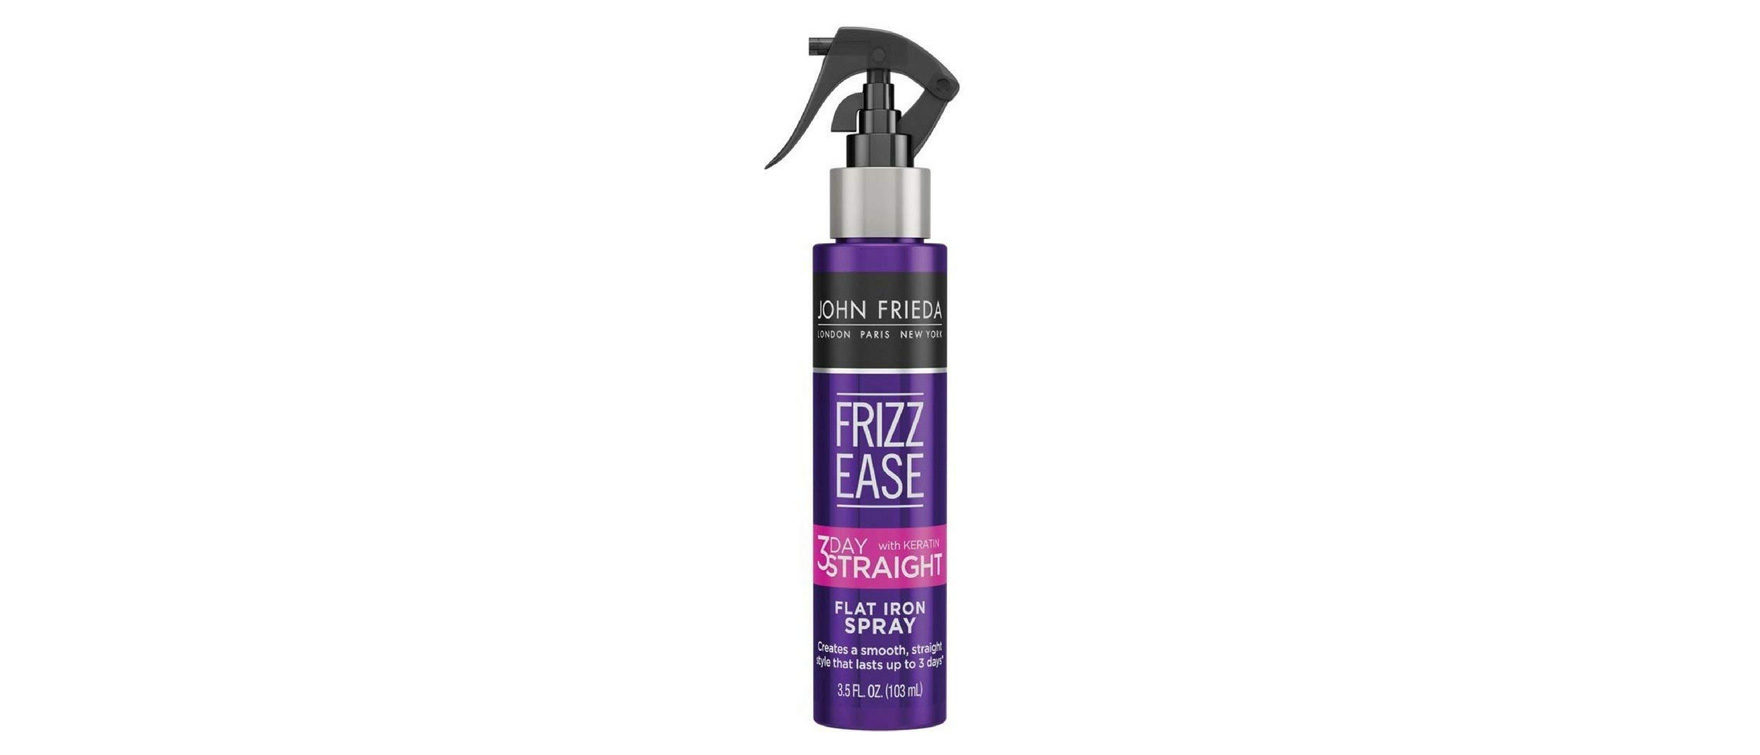 6. John Frieda Frizz Ease 3-Day Straight Flat Iron Spray